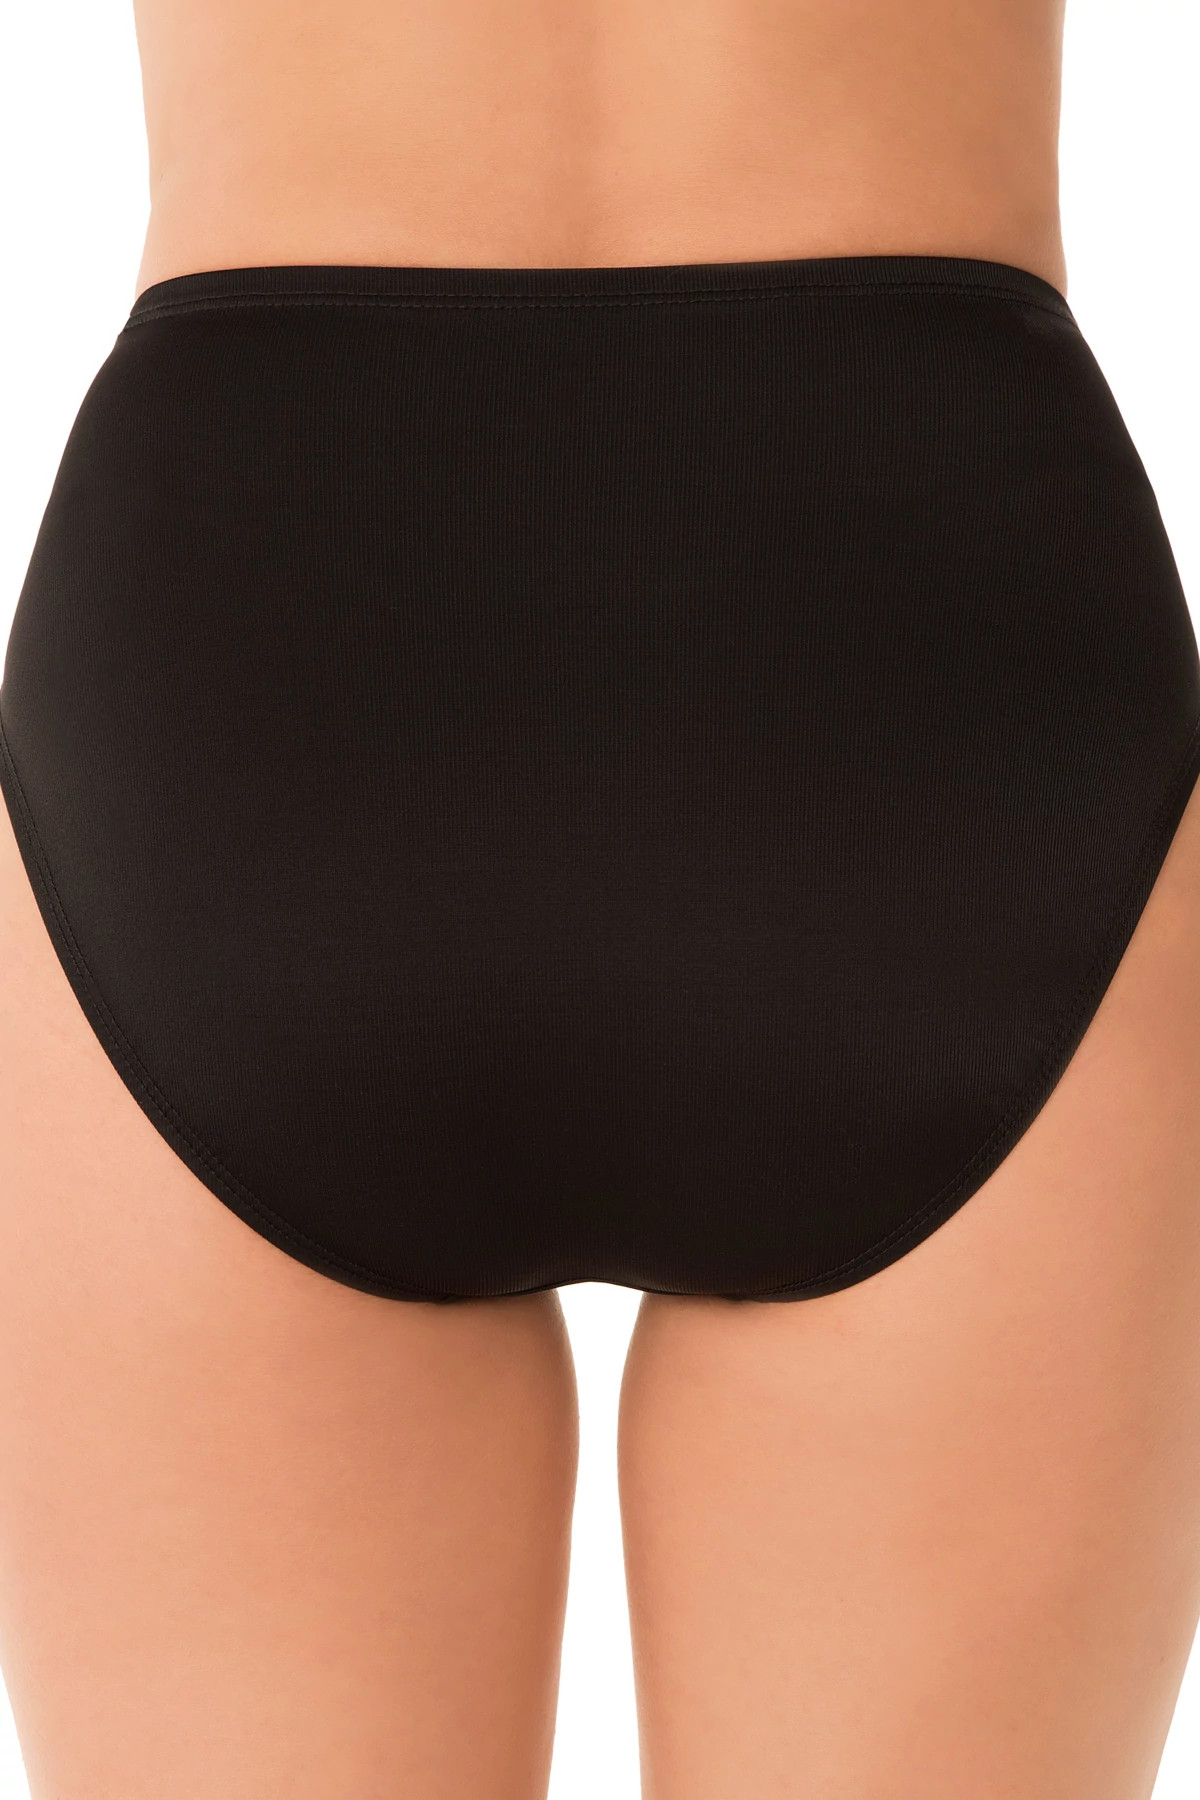 BLACK Basic High Waist Bikini Bottom image number 2